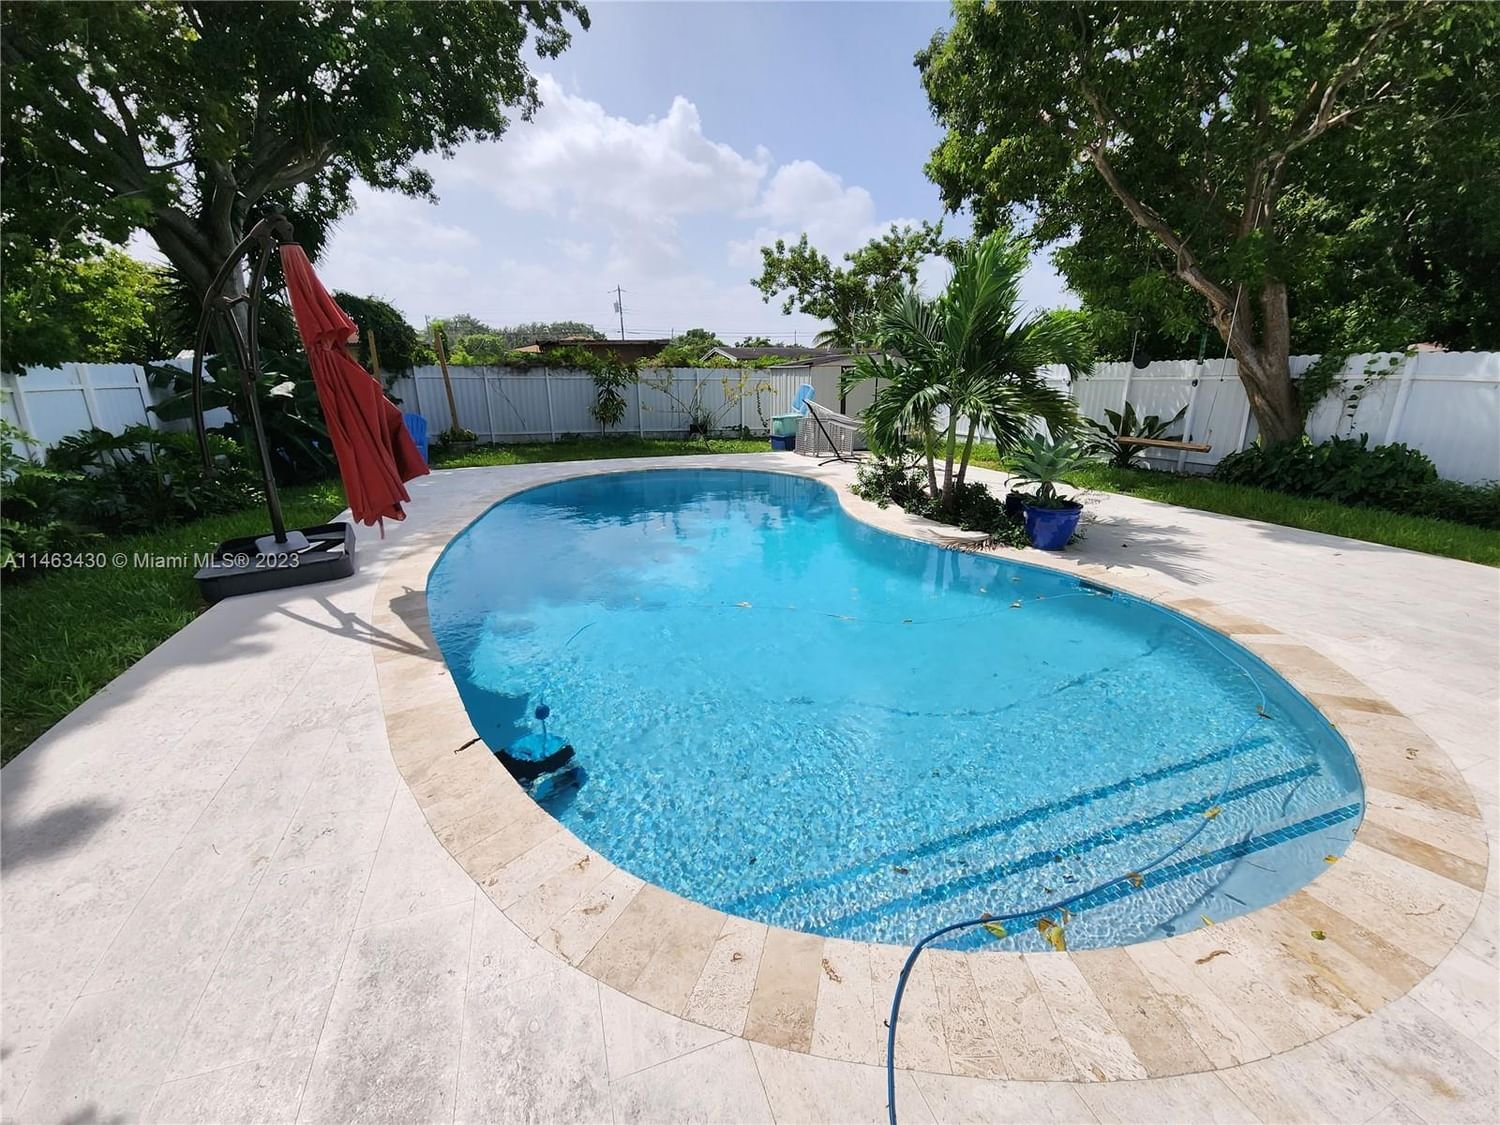 Real estate property located at 2120 66th St, Miami-Dade County, Miami, FL